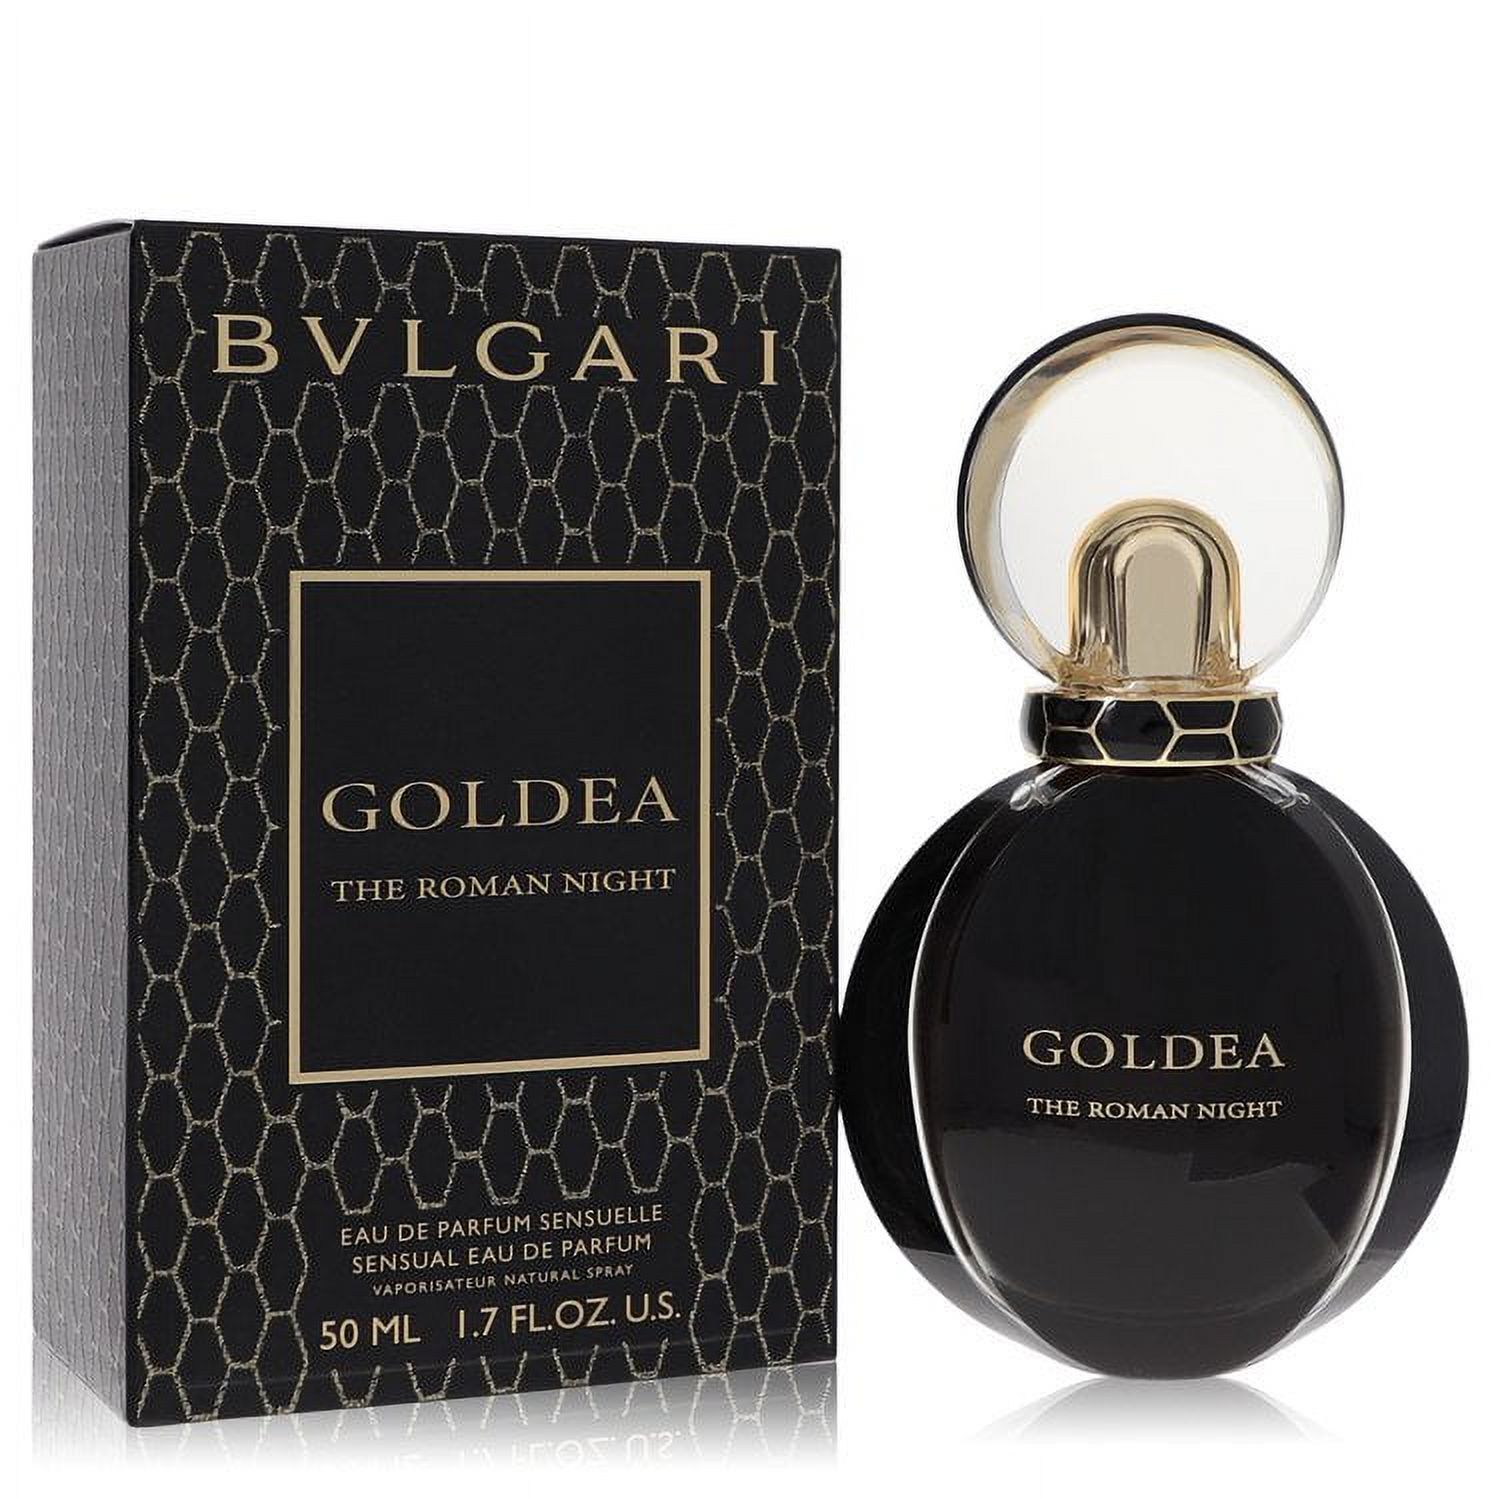 Bvlgari Goldea The Roman Night by Bvlgari Eau De Parfum Sensuelle Spray for Women - image 1 of 2